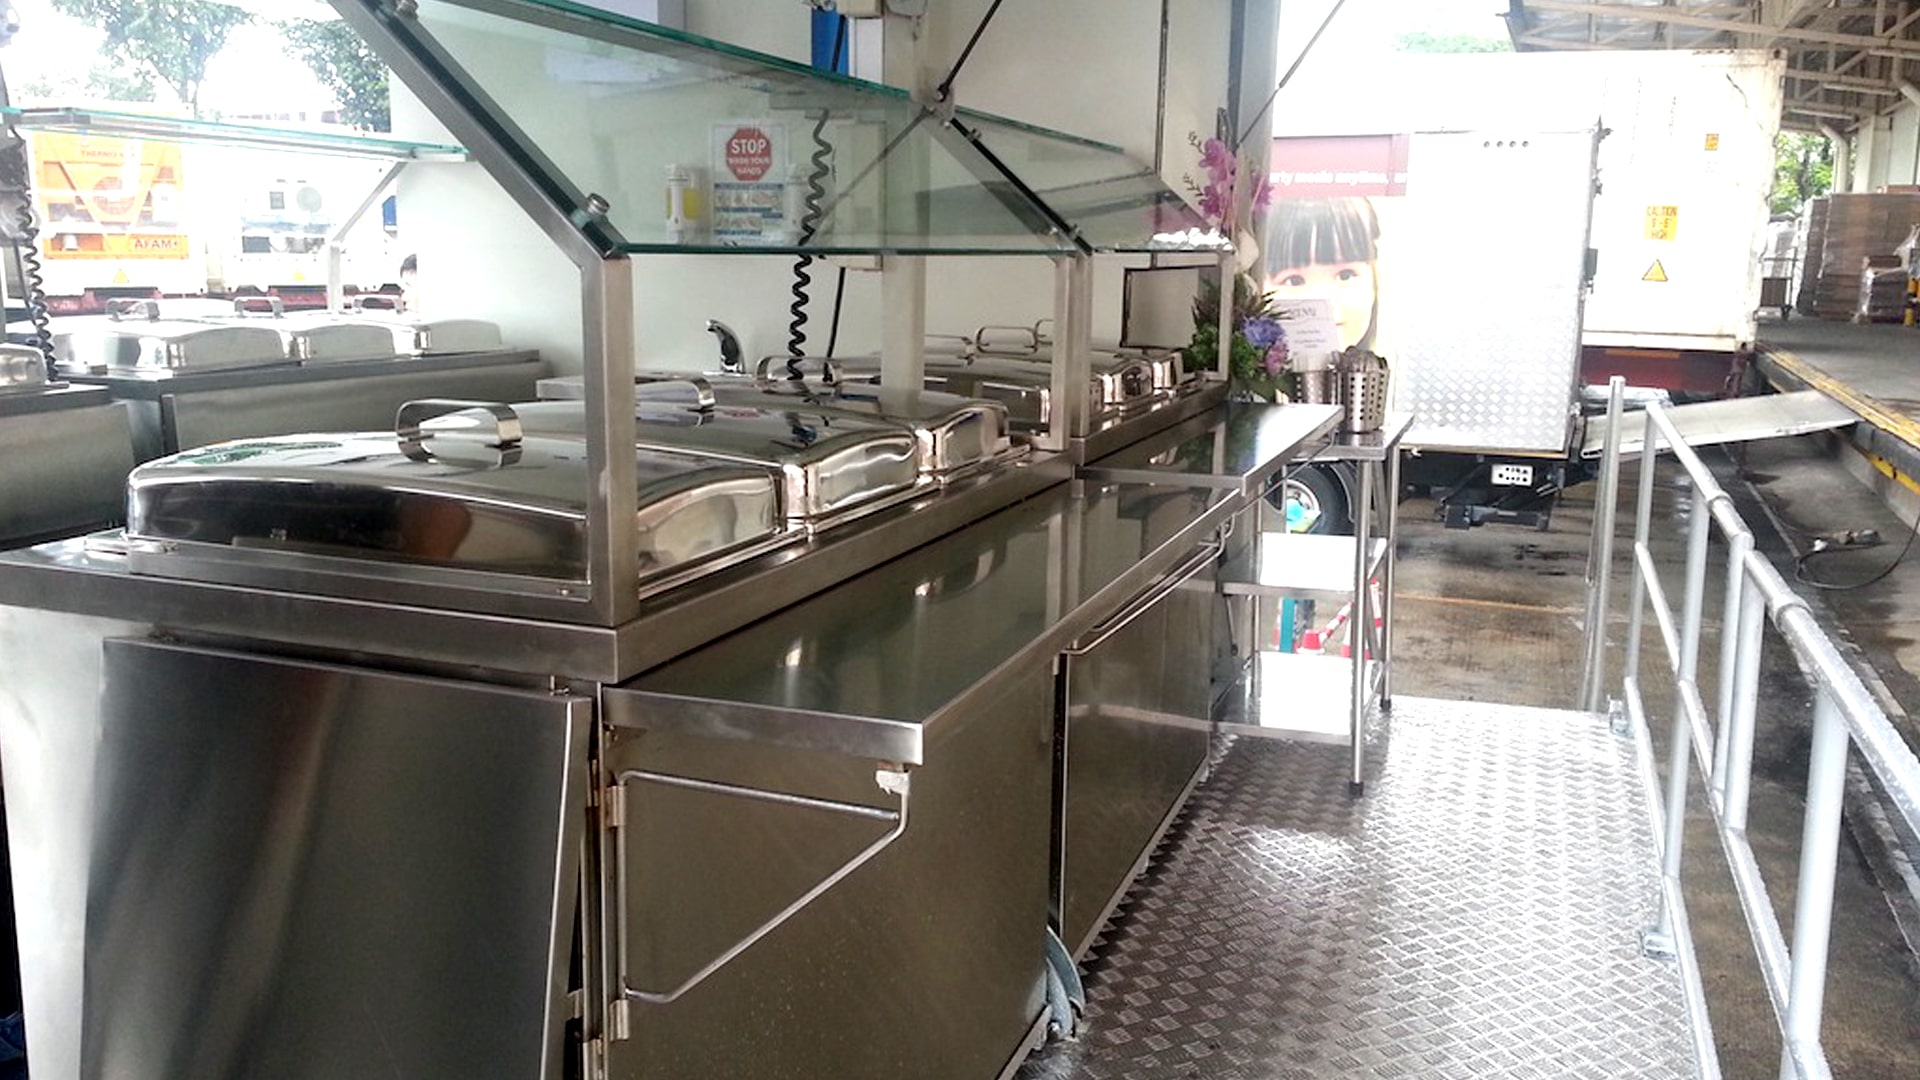 tsc_tubelar_f&b_mobile-kitchen_singapore-food-industry-04_1920x1080-min